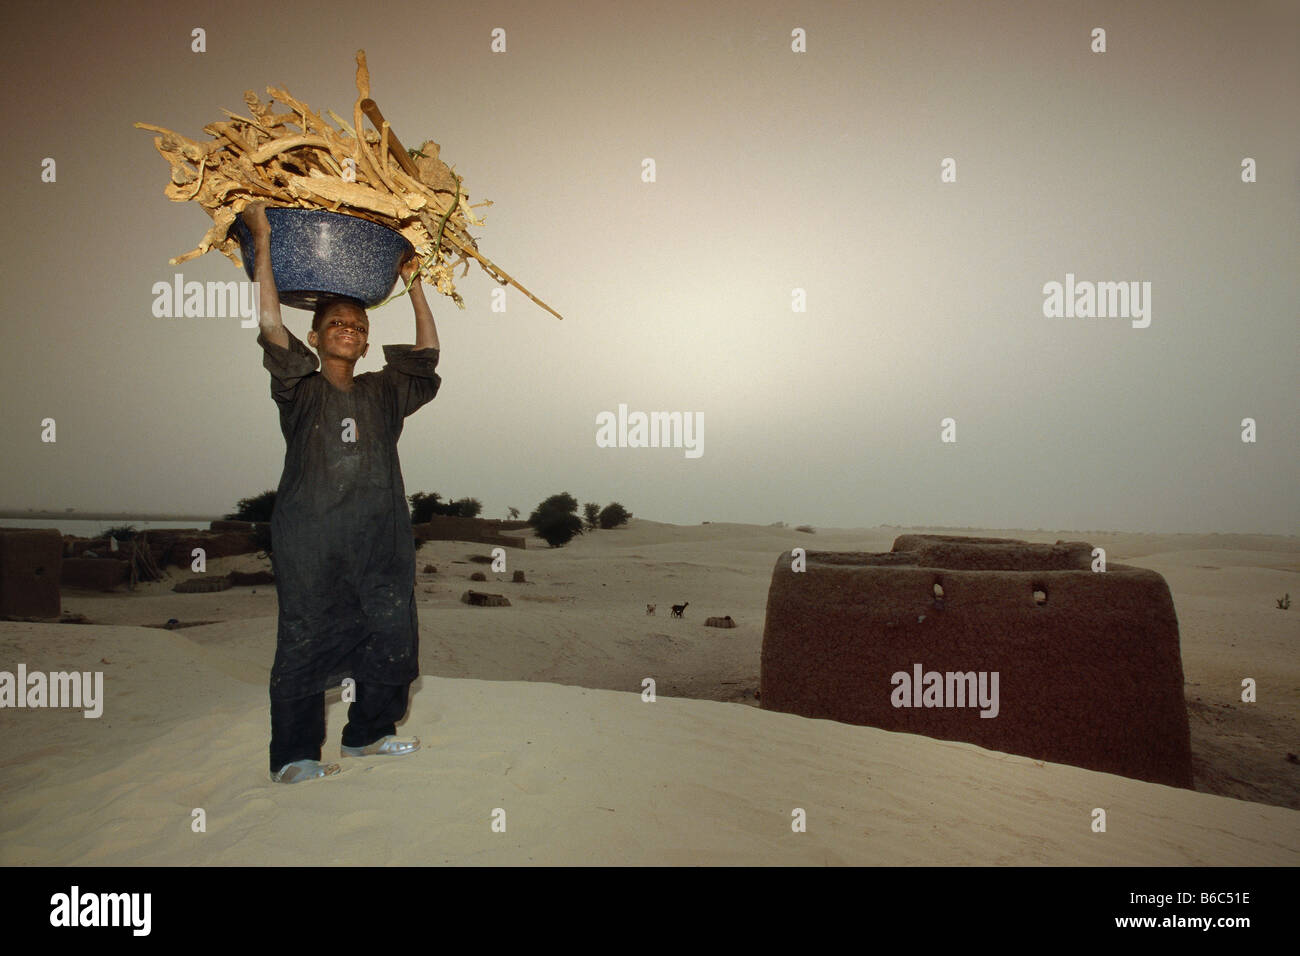 Mali, Bamba, boy carrying fuelfood on head. Stock Photo